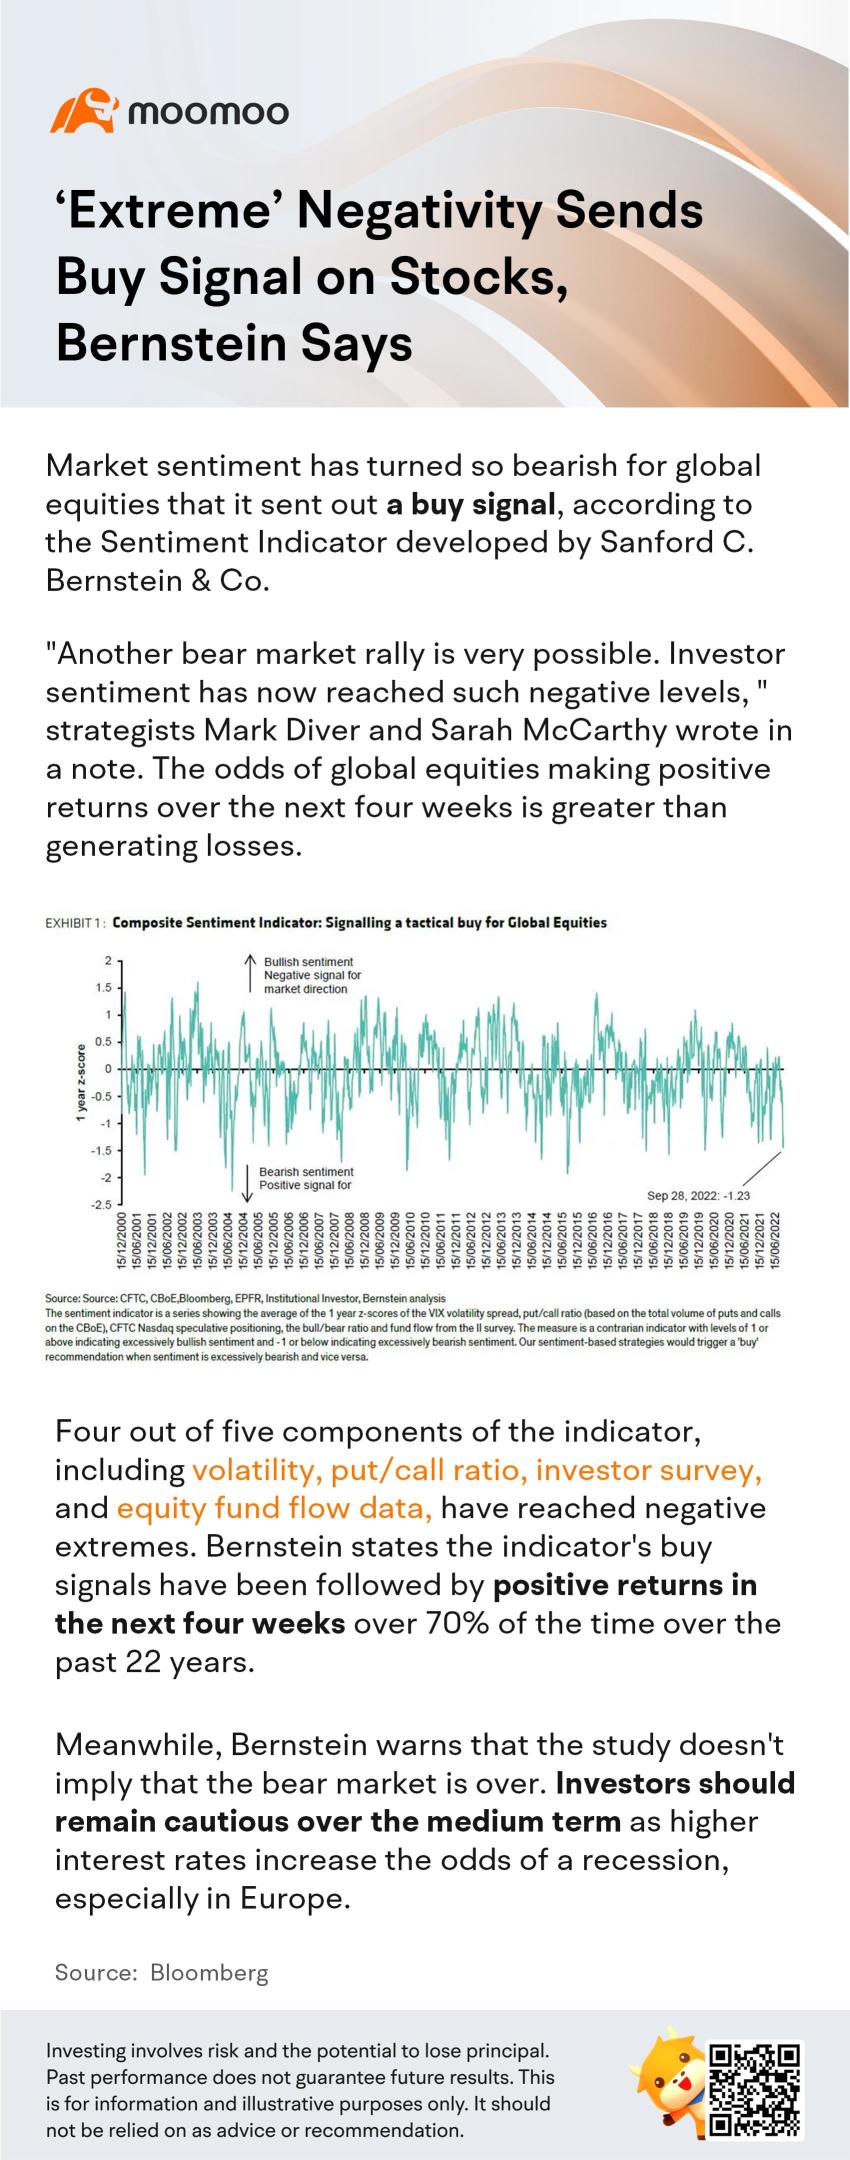 'Extreme' Negativity Sends Buy Signal on Stocks, Bernstein Says